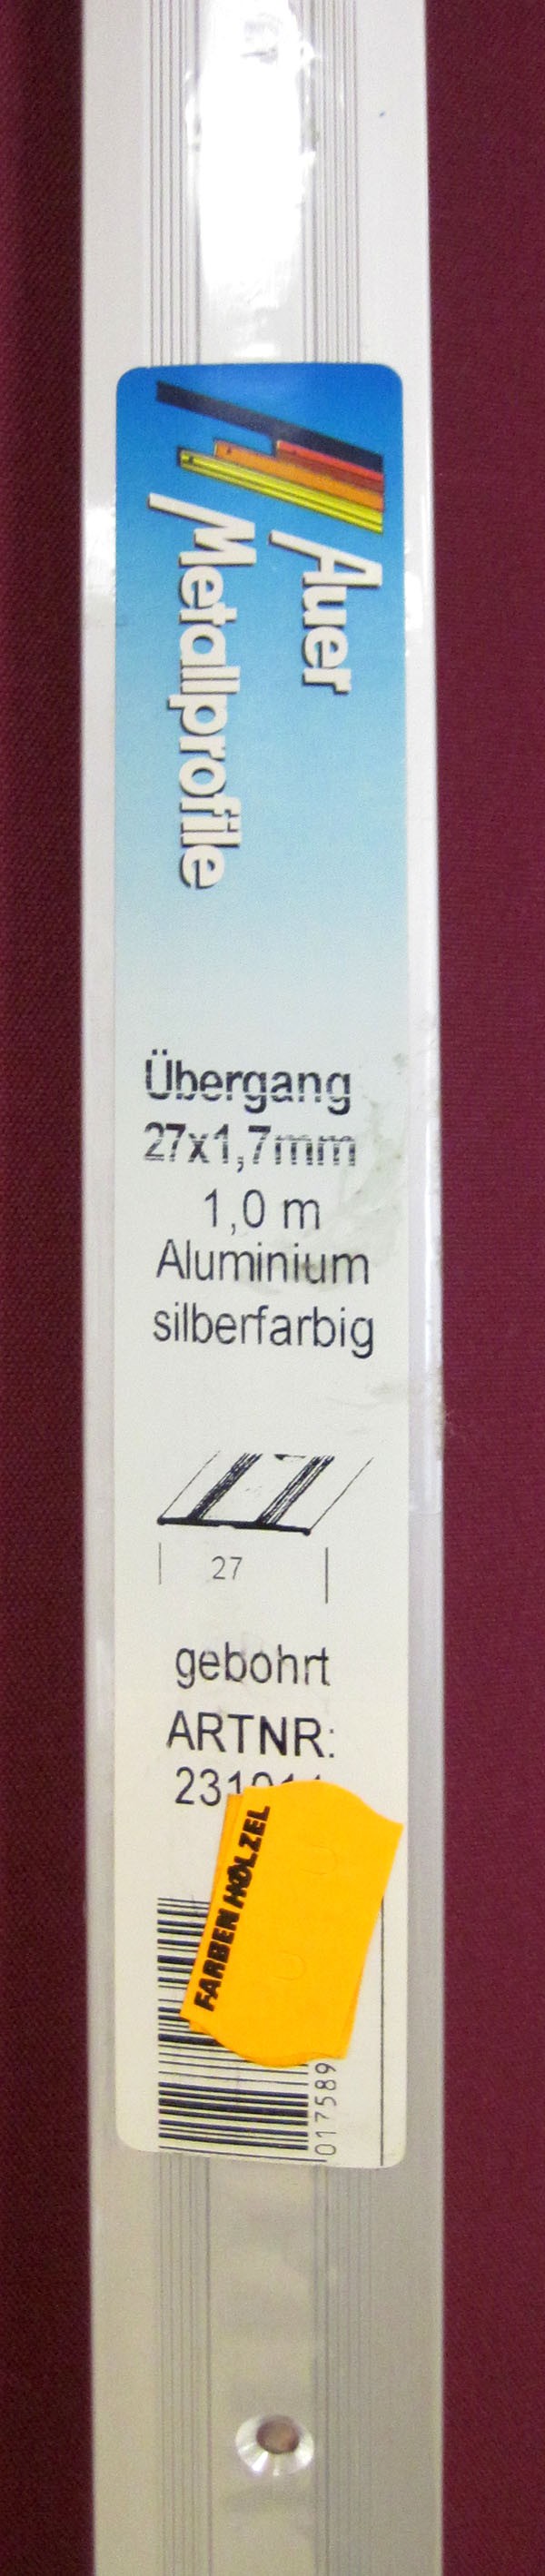 Übergangsprofil 27x1,7 mm 1,0 m silberfarbig gebohrt 